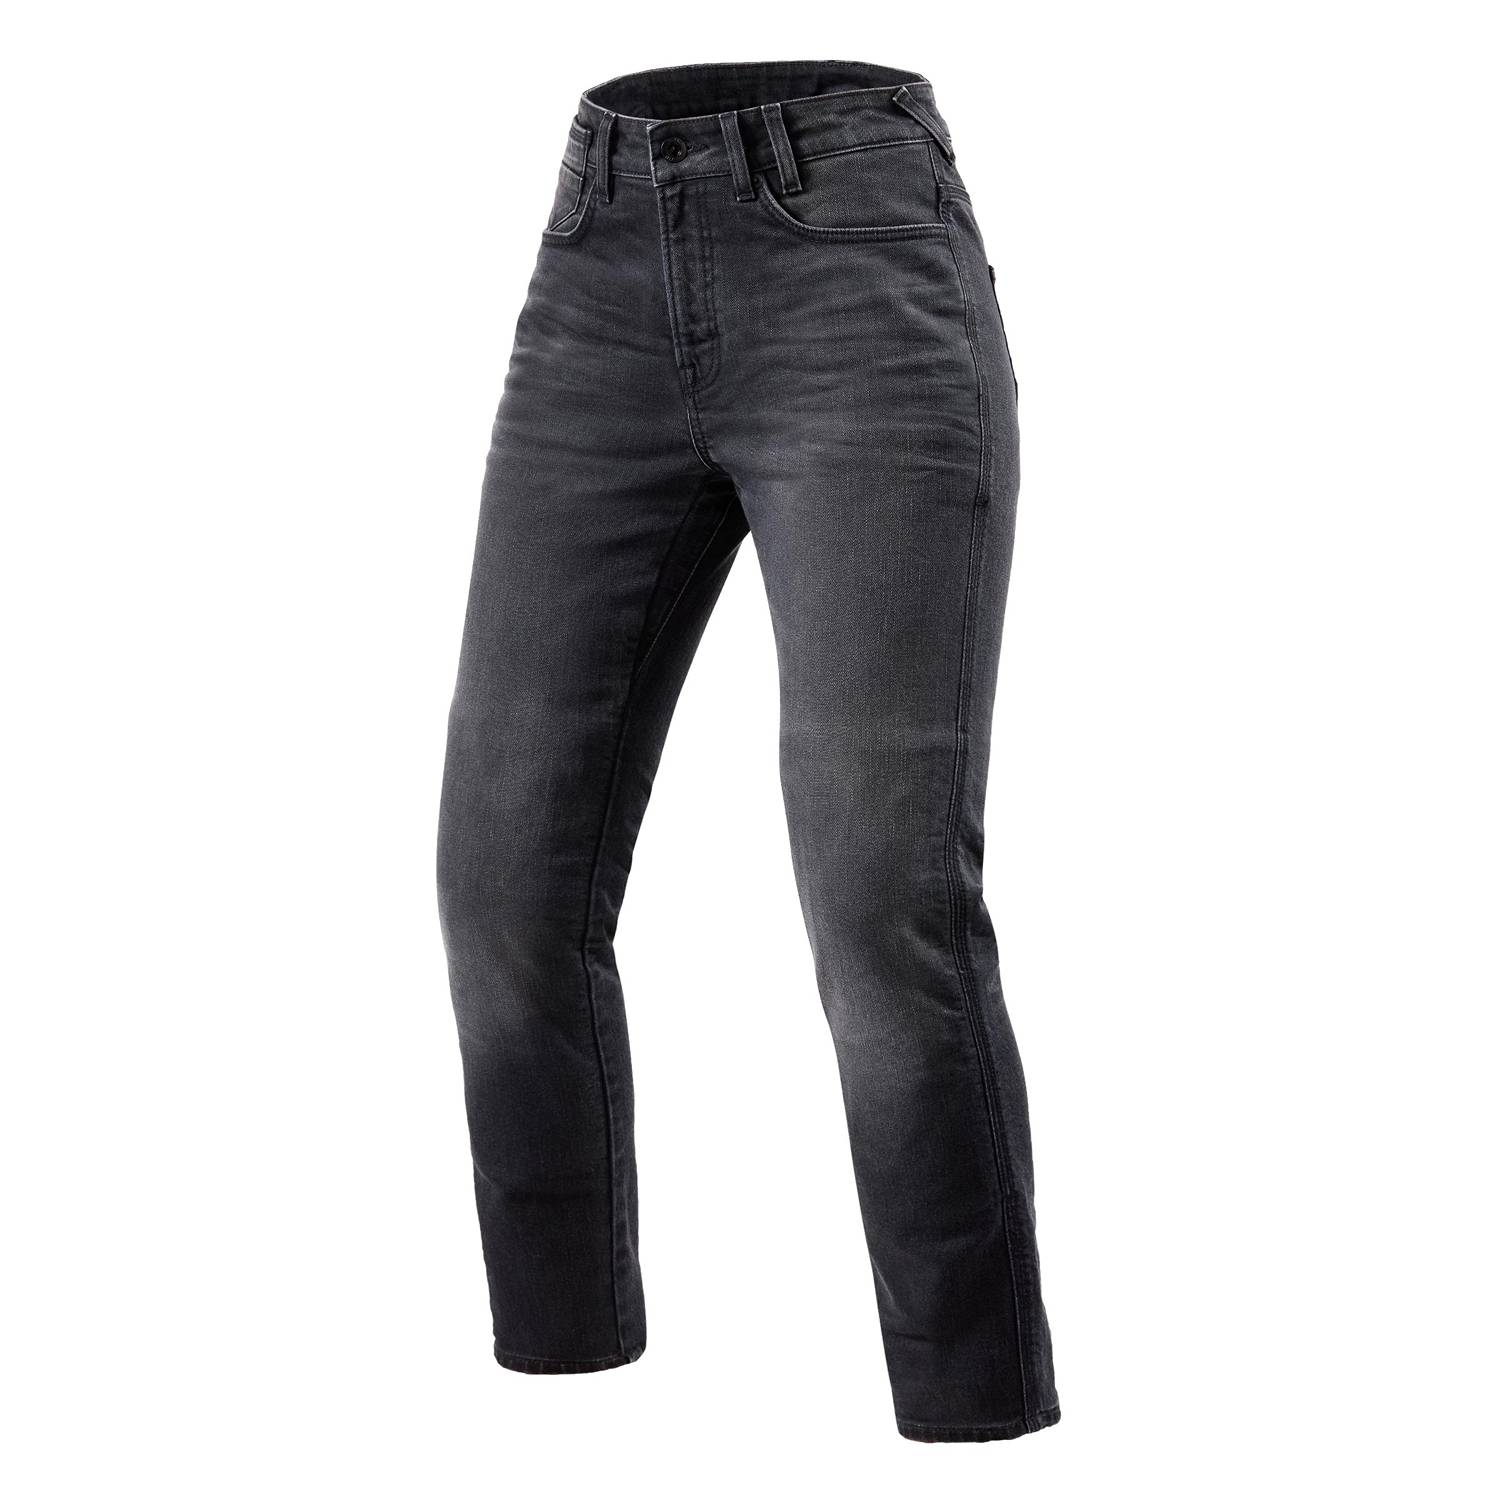 Image of REV'IT! Jeans Victoria 2 Ladies SF Mid Grey Used Motorcycle Jeans Size L30/W28 EN